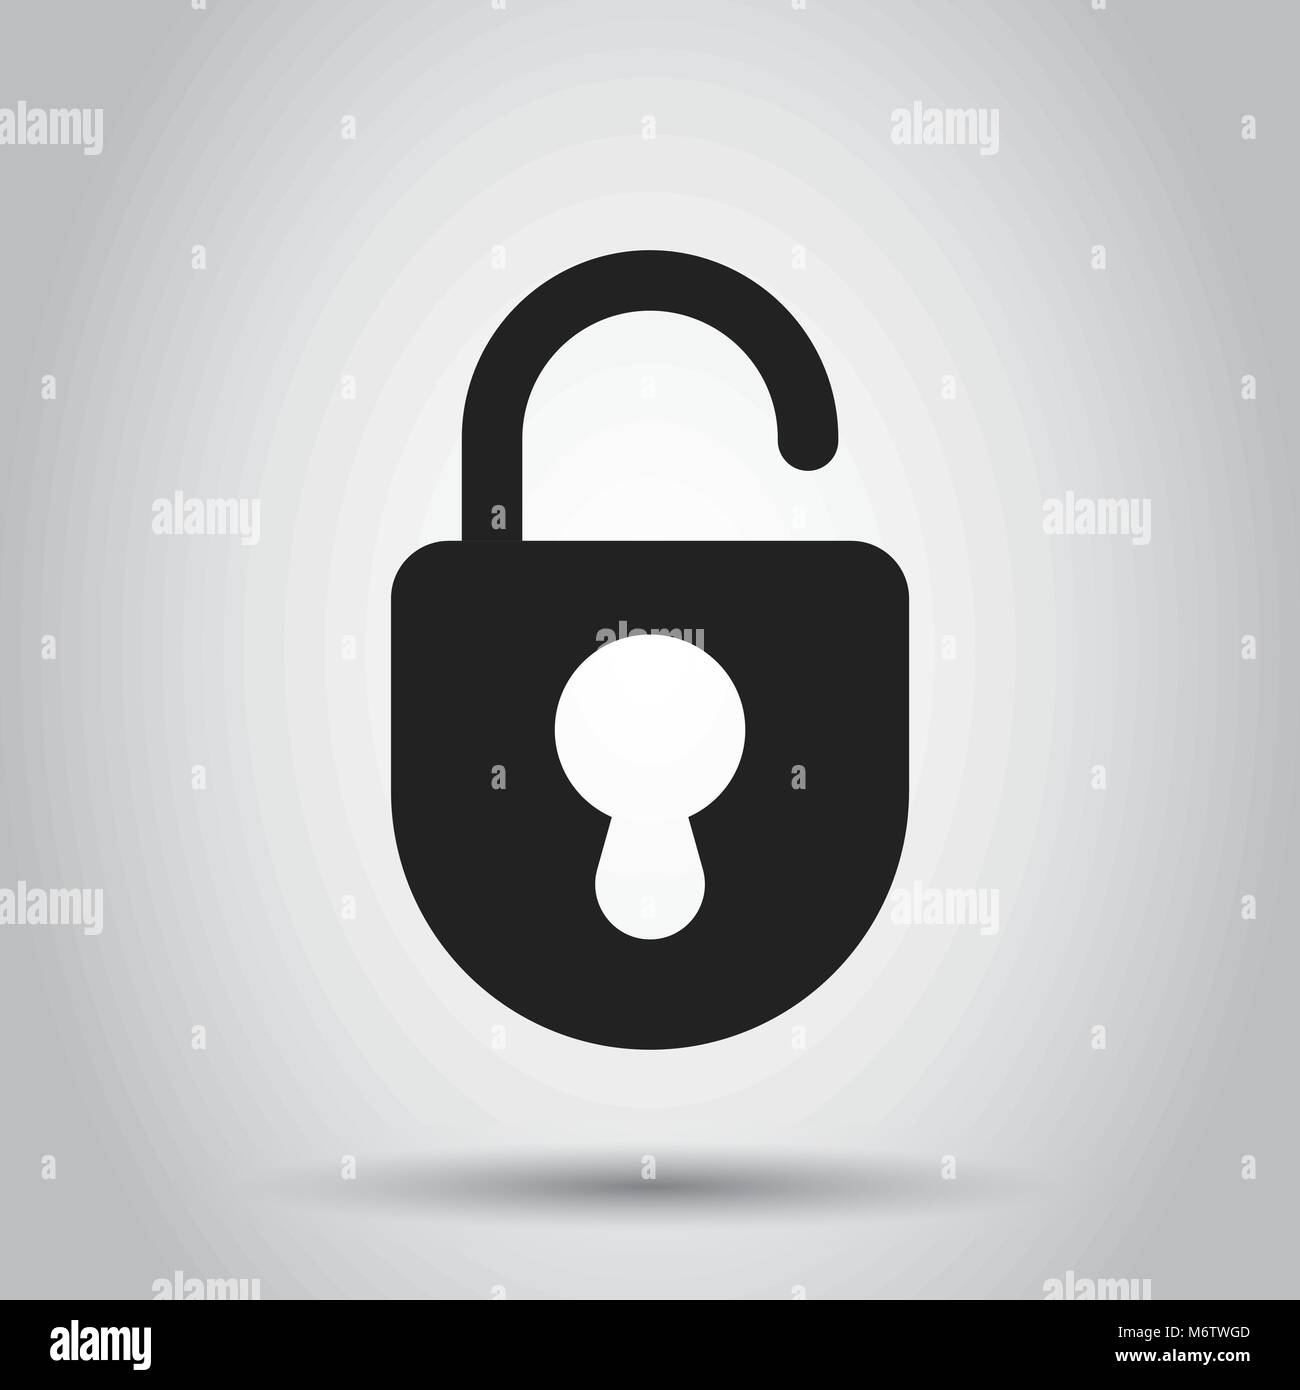 Lock sign vector icon. Padlock locker illustration. Business concept simple flat pictogram. Stock Vector